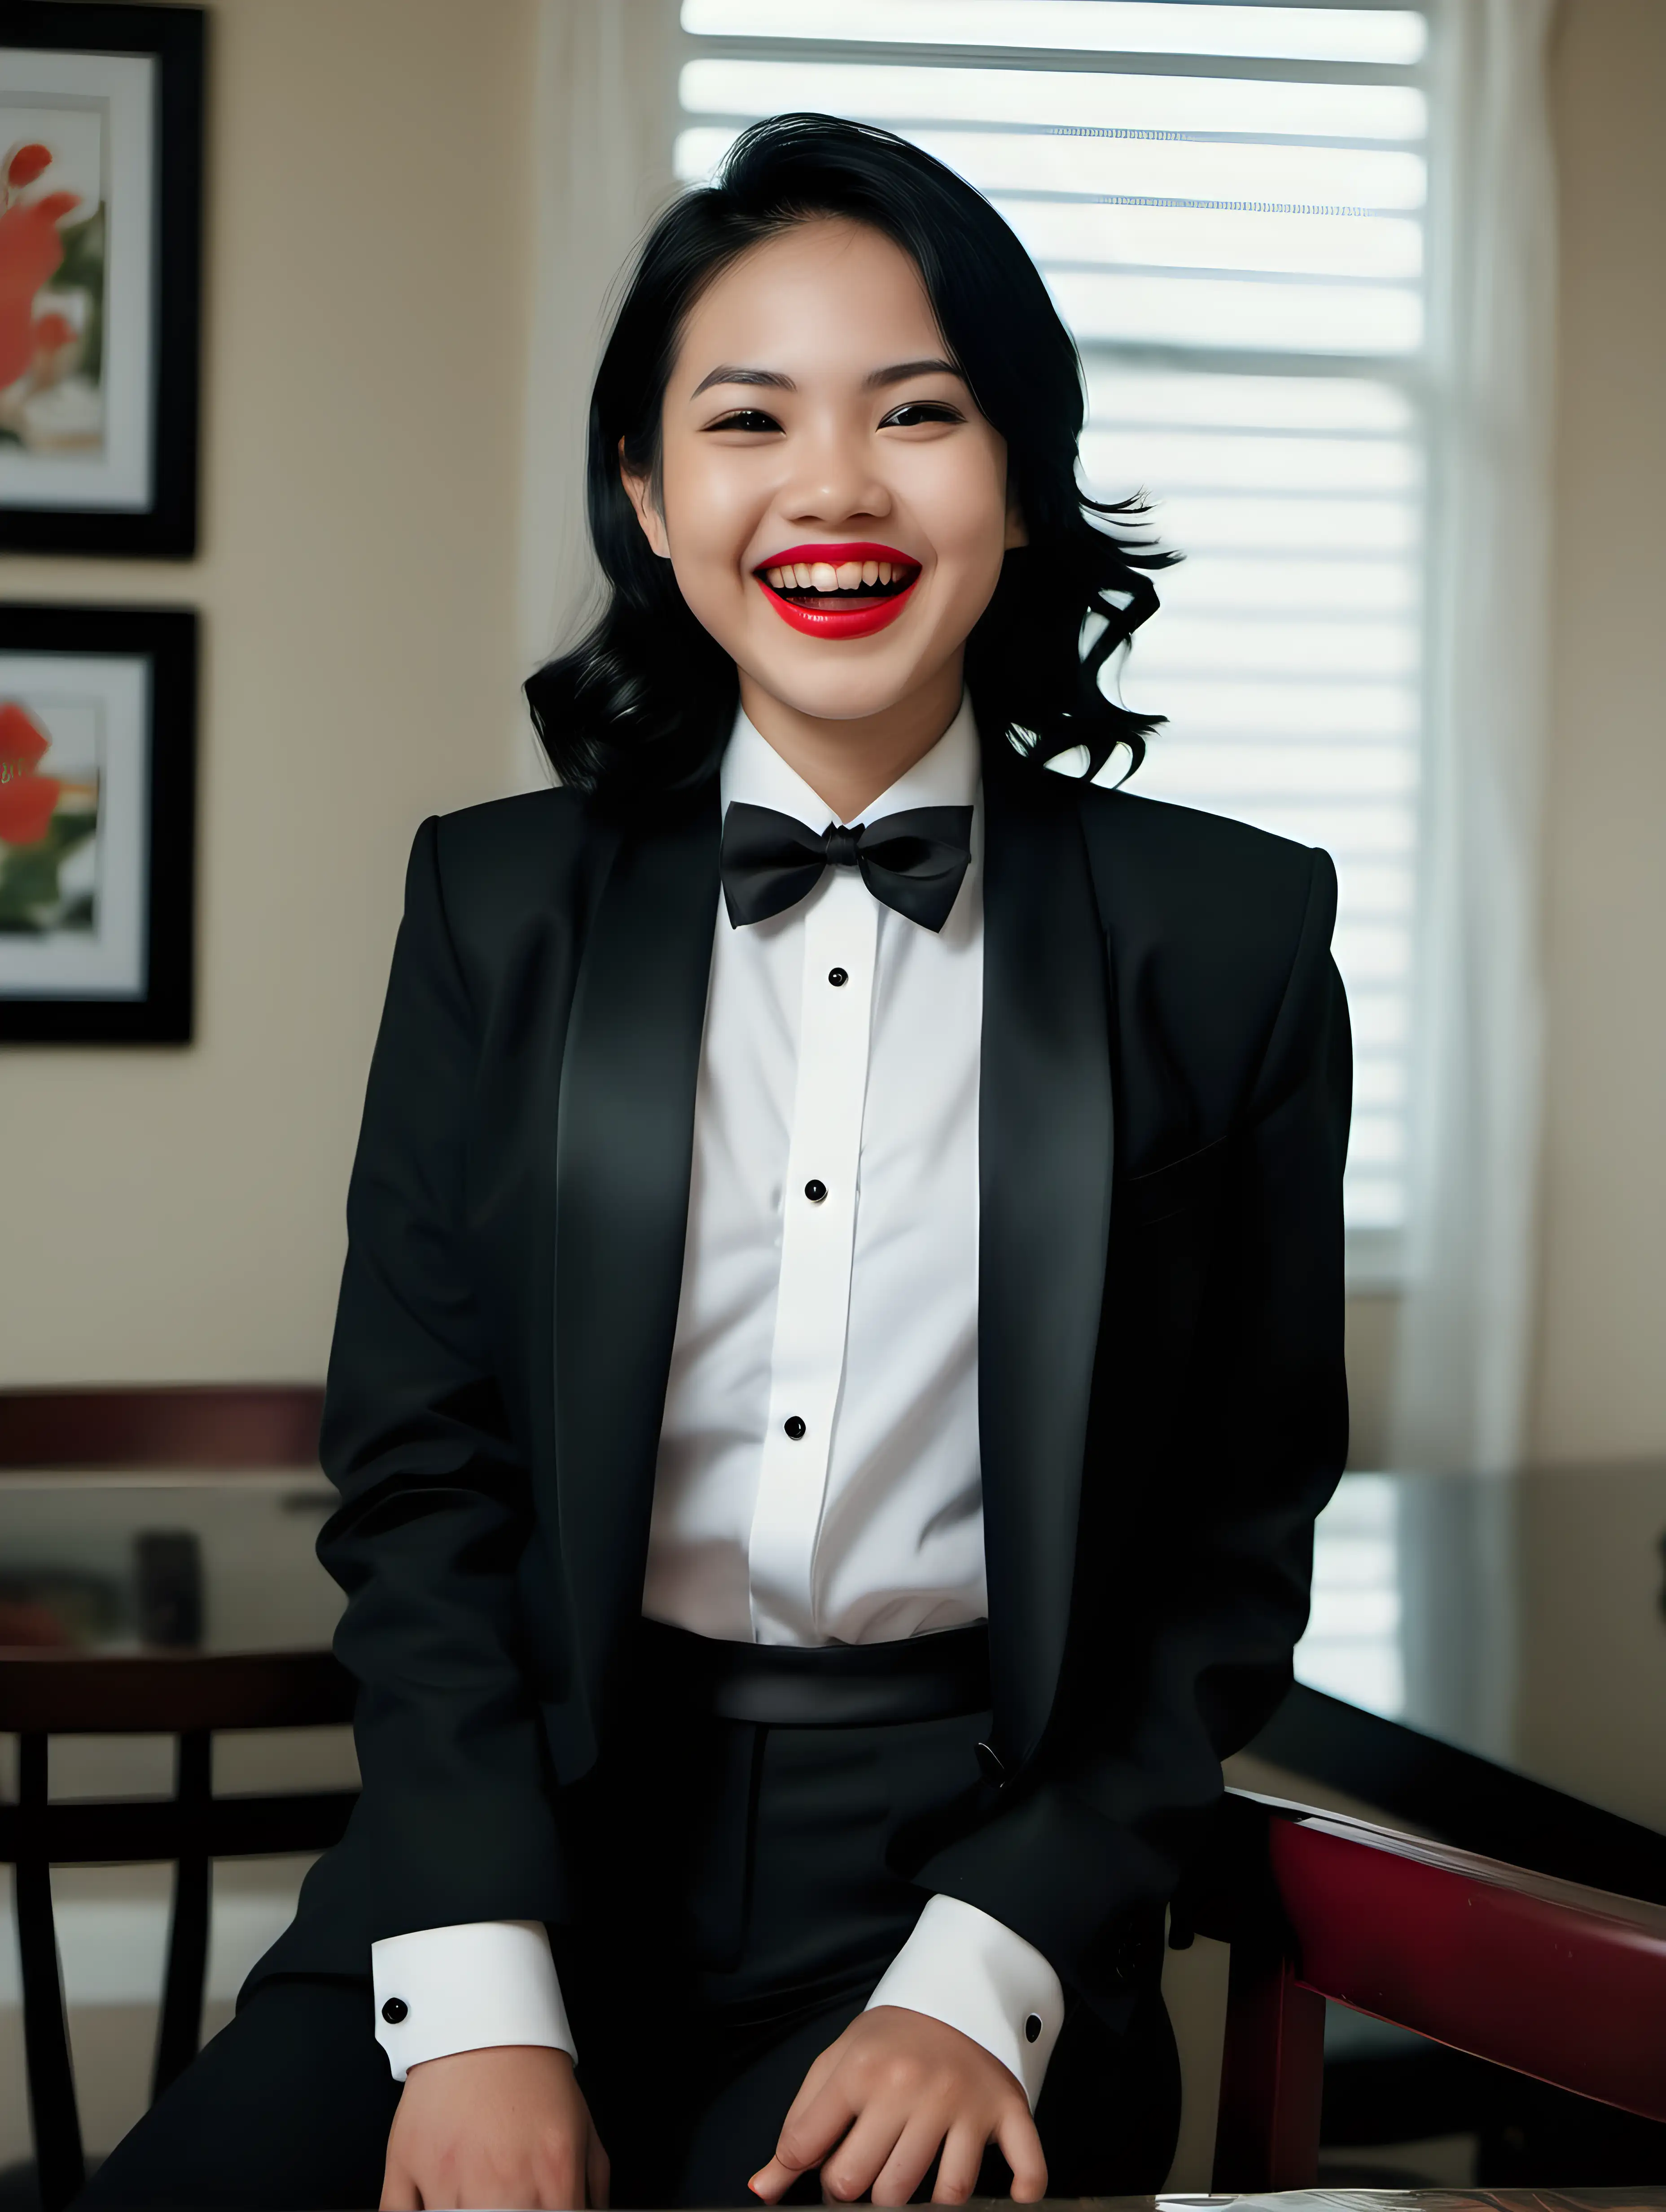 Joyful-Vietnamese-Woman-in-Tuxedo-Laughing-at-Dining-Table